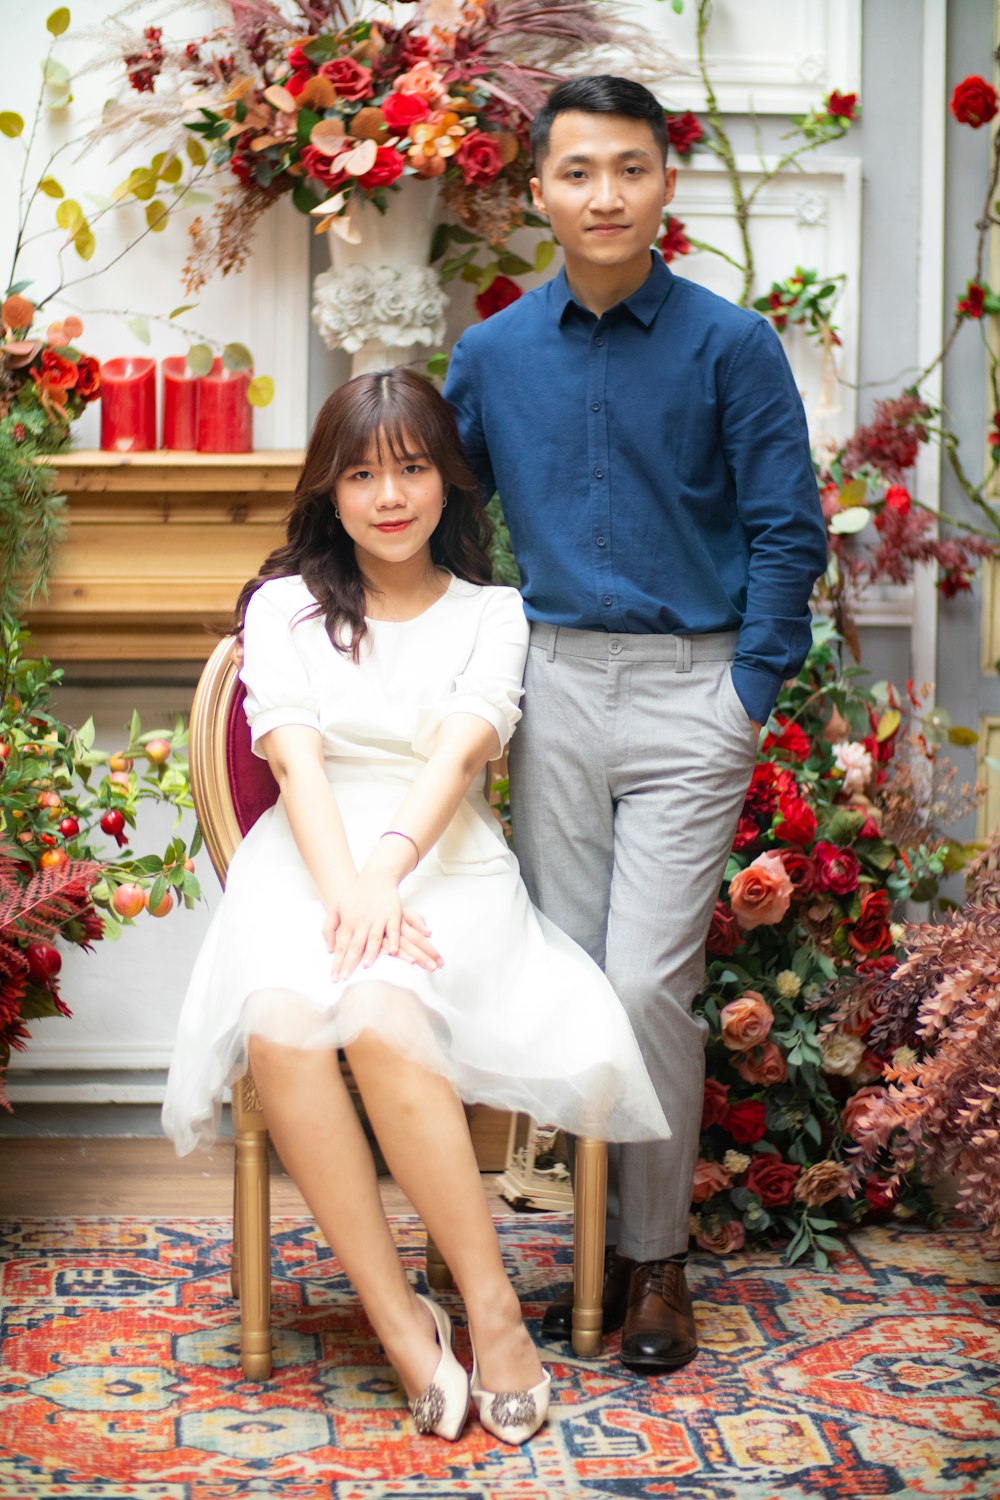 man in blue dress shirt sitting beside woman in white dress